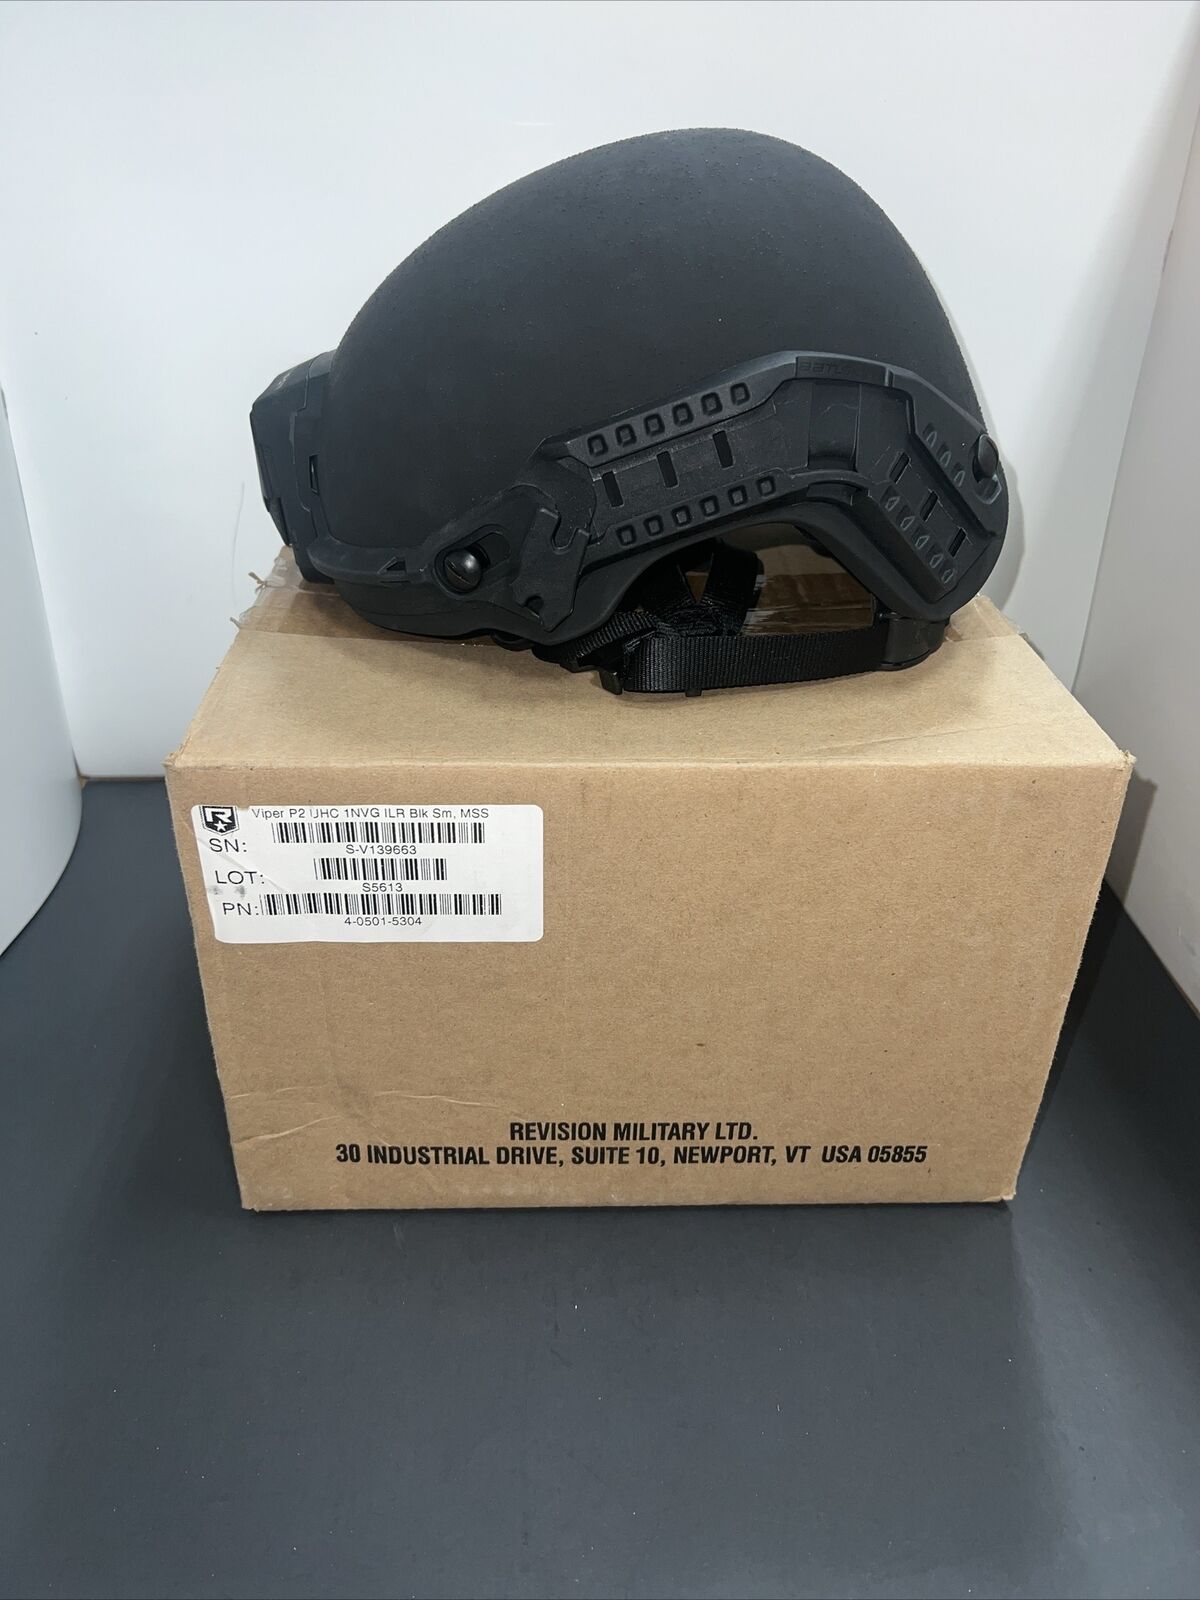 Revision Batlskin Viper Black Helmet Small Part# 4-0501-5304 NEW